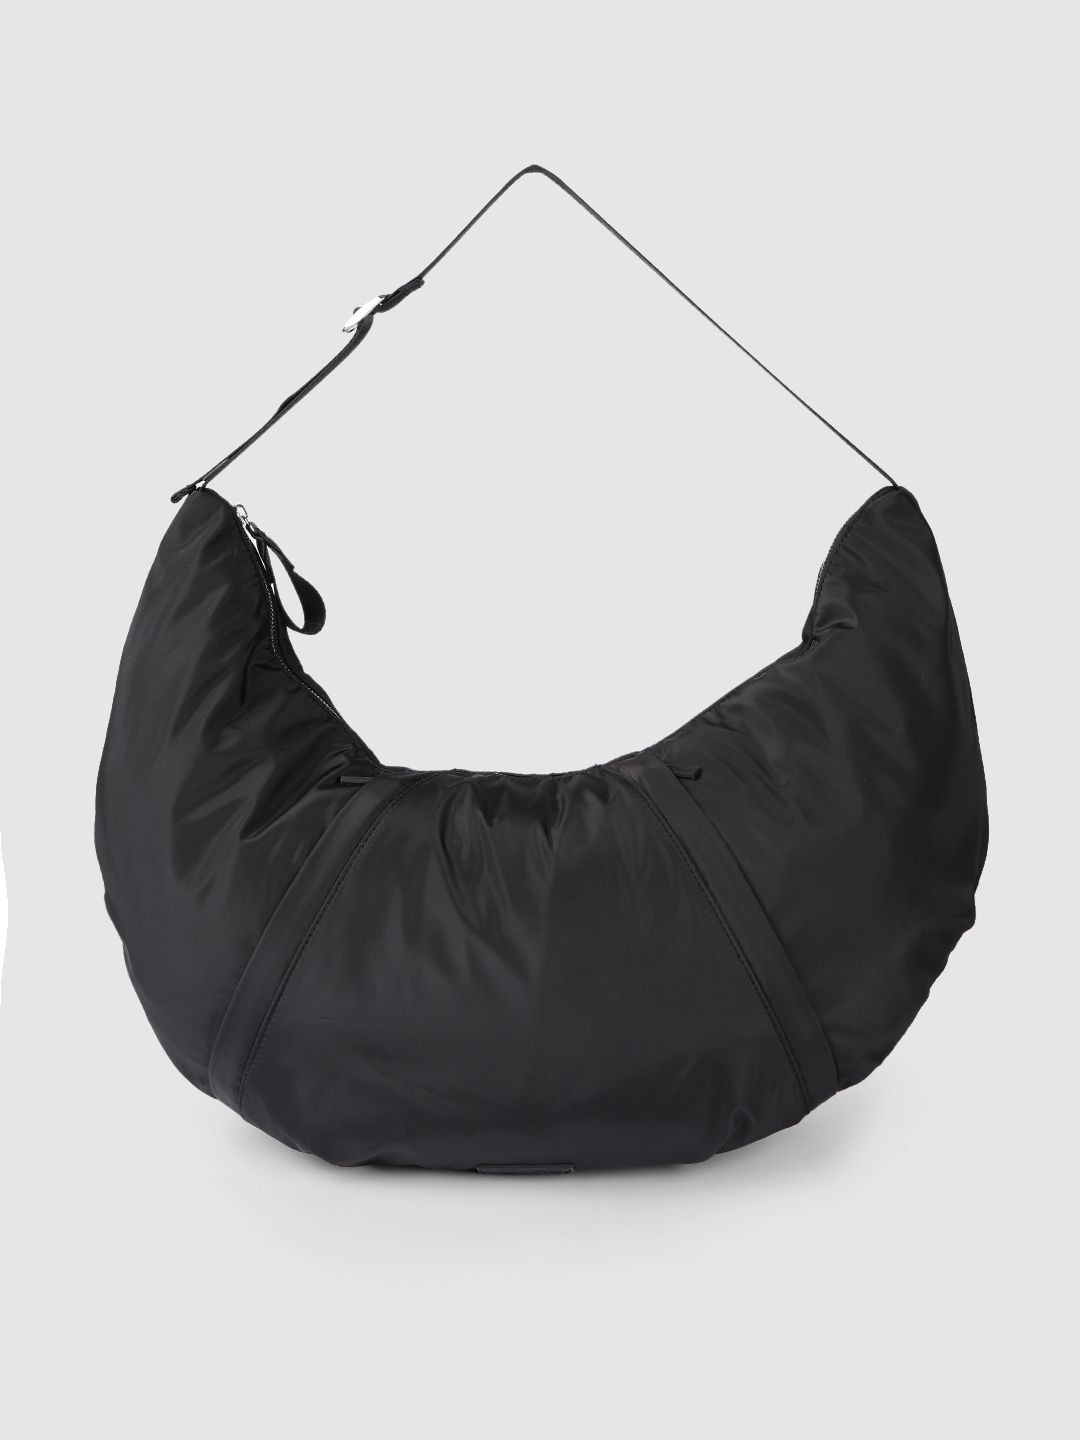 Accessorize Black Solid Hobo Bag Price in India